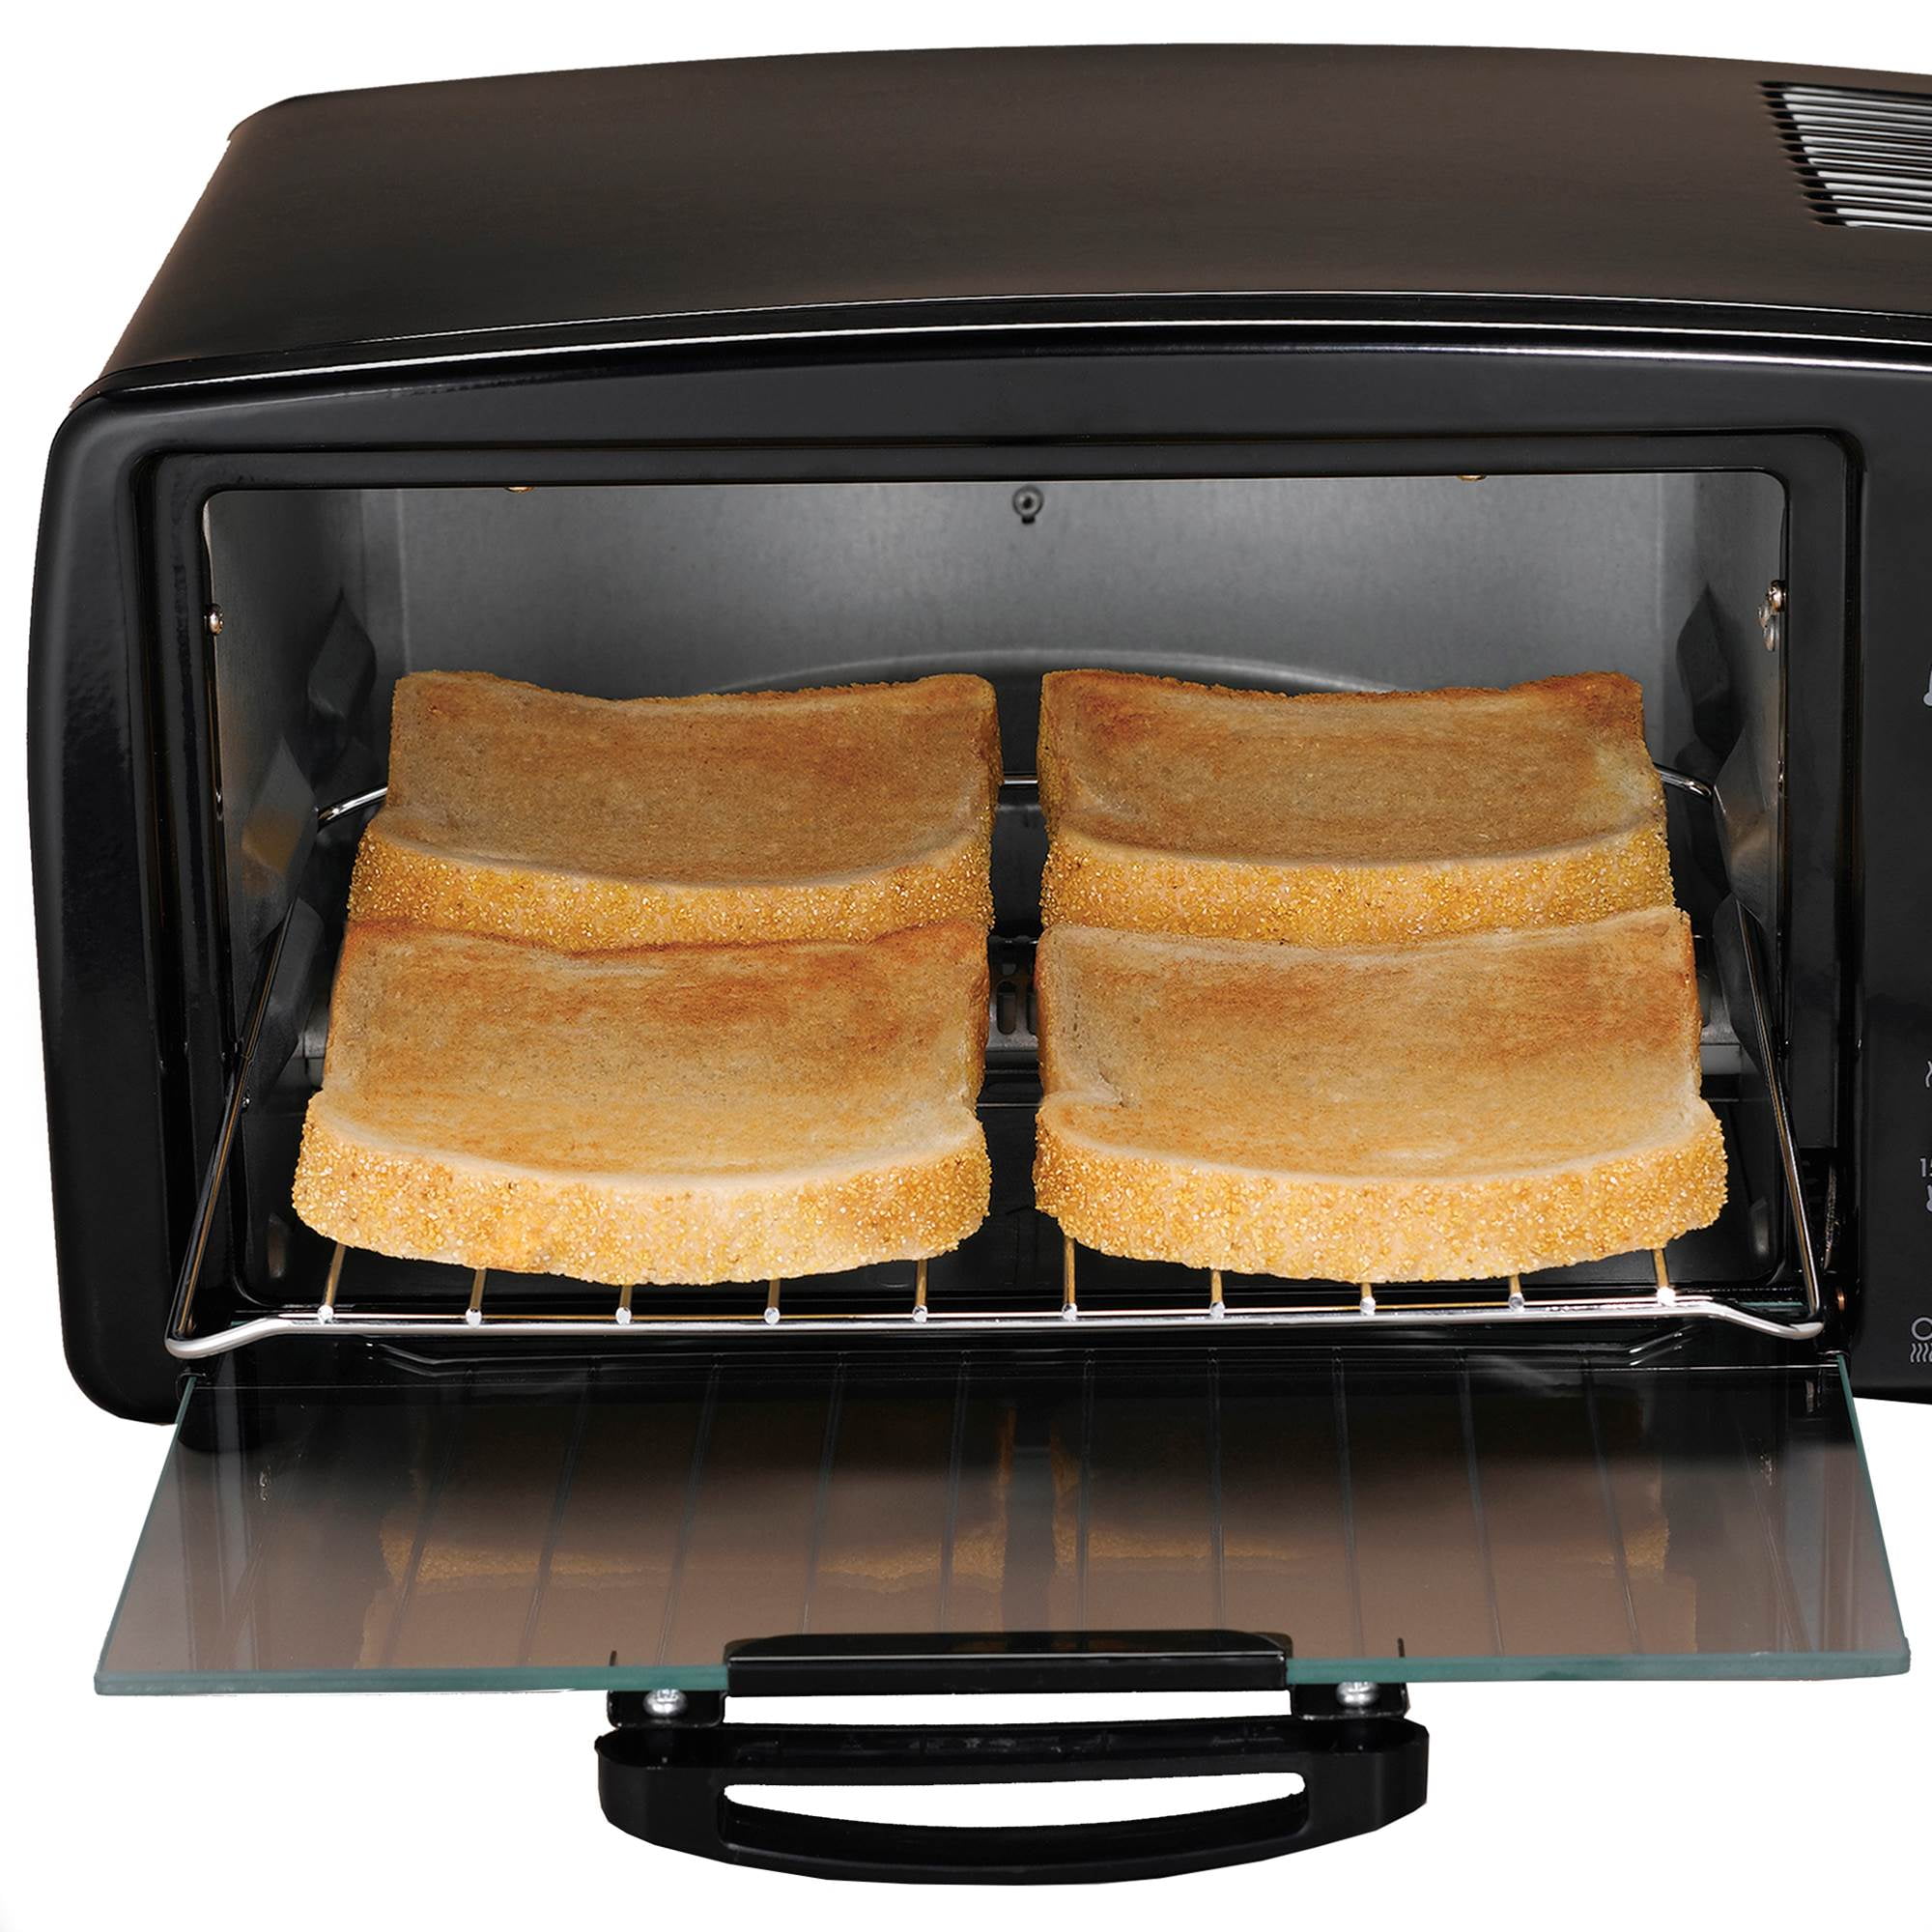 Proctor Silex 4-Slice Toaster Oven Broiler